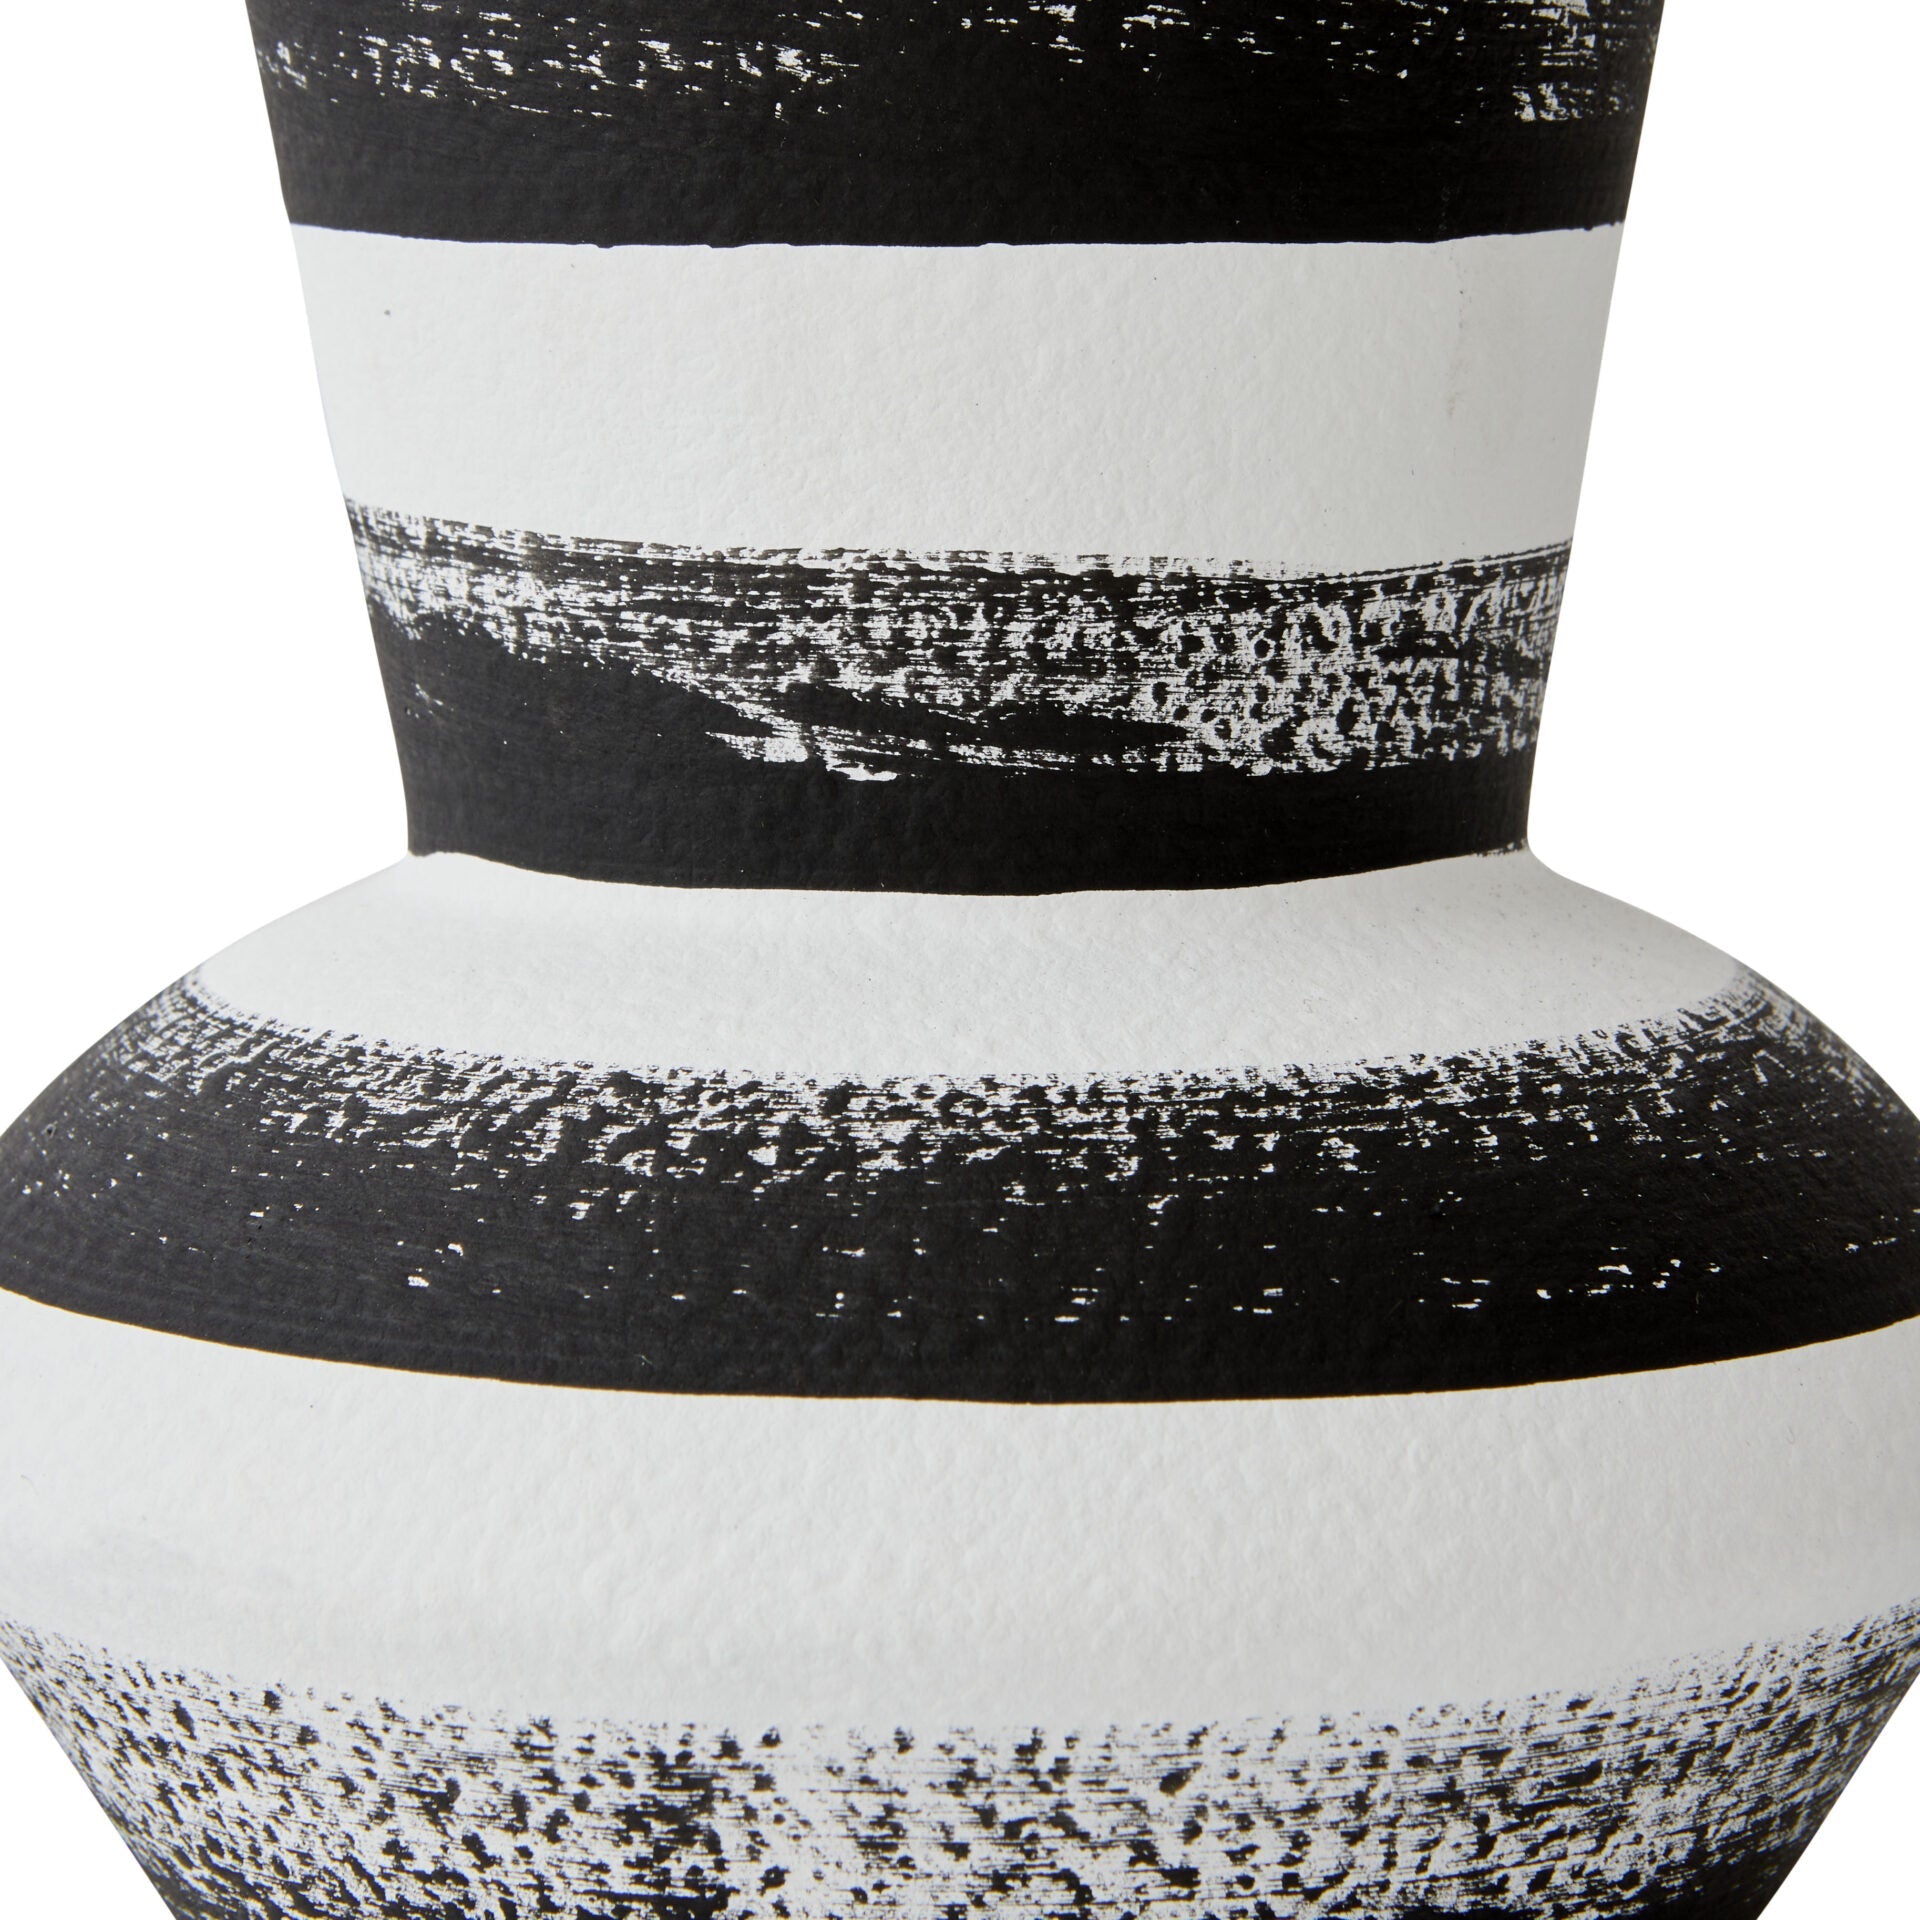 Ceramic Brushed Vase in Black and White - Small - Notbrand